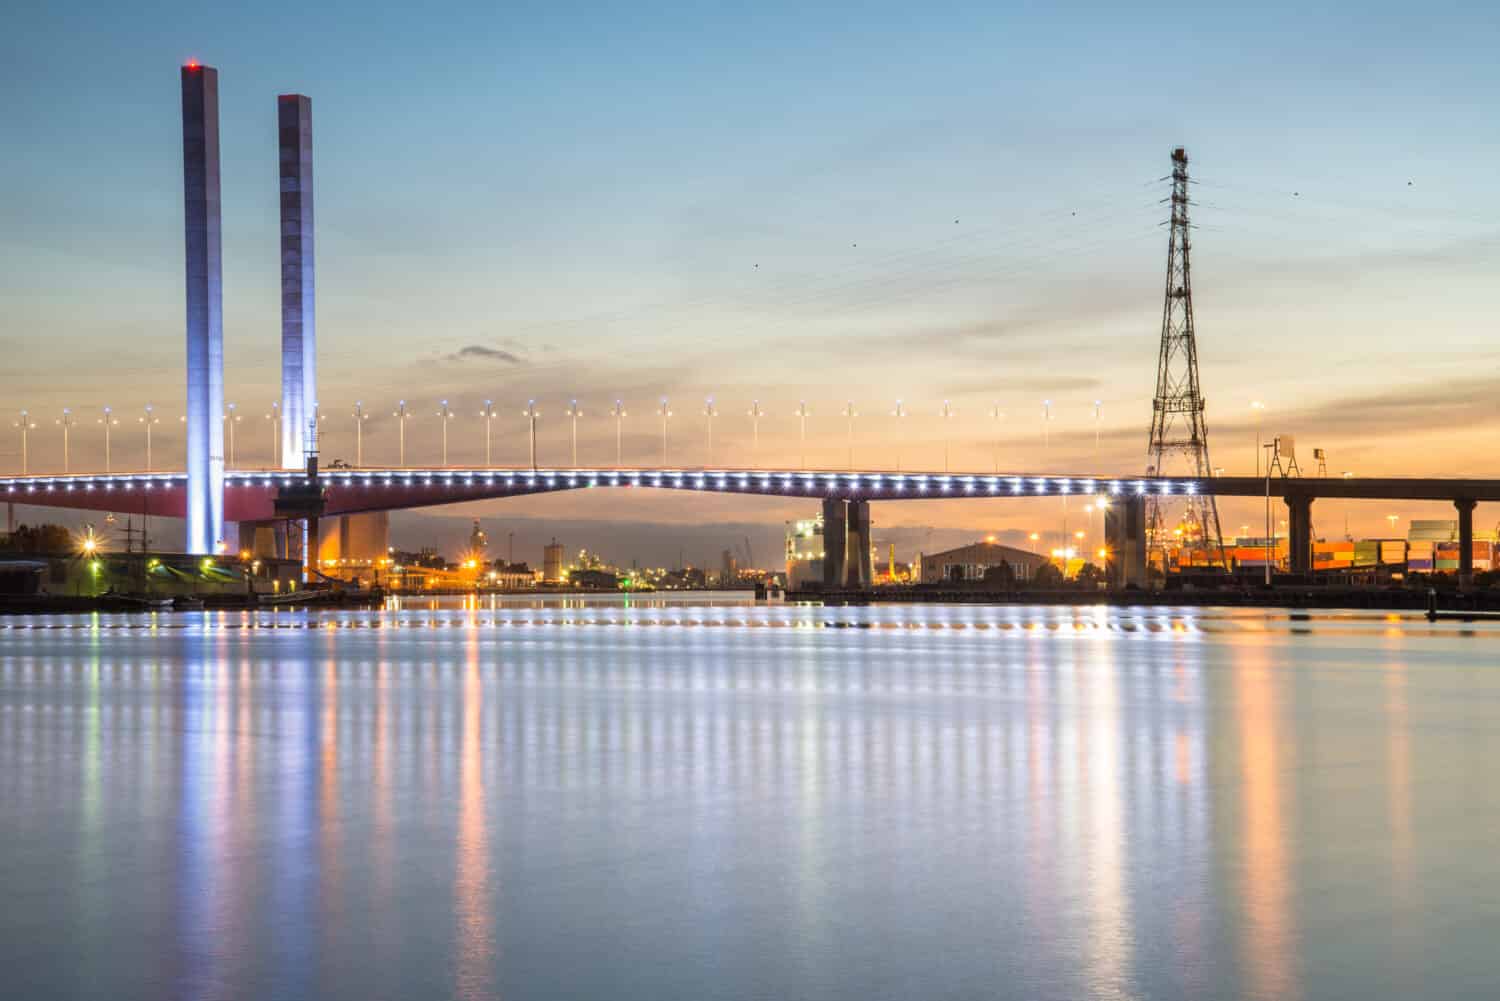 Bolte bridge the iconic landmark of Docklands, Melbourne, Australia.